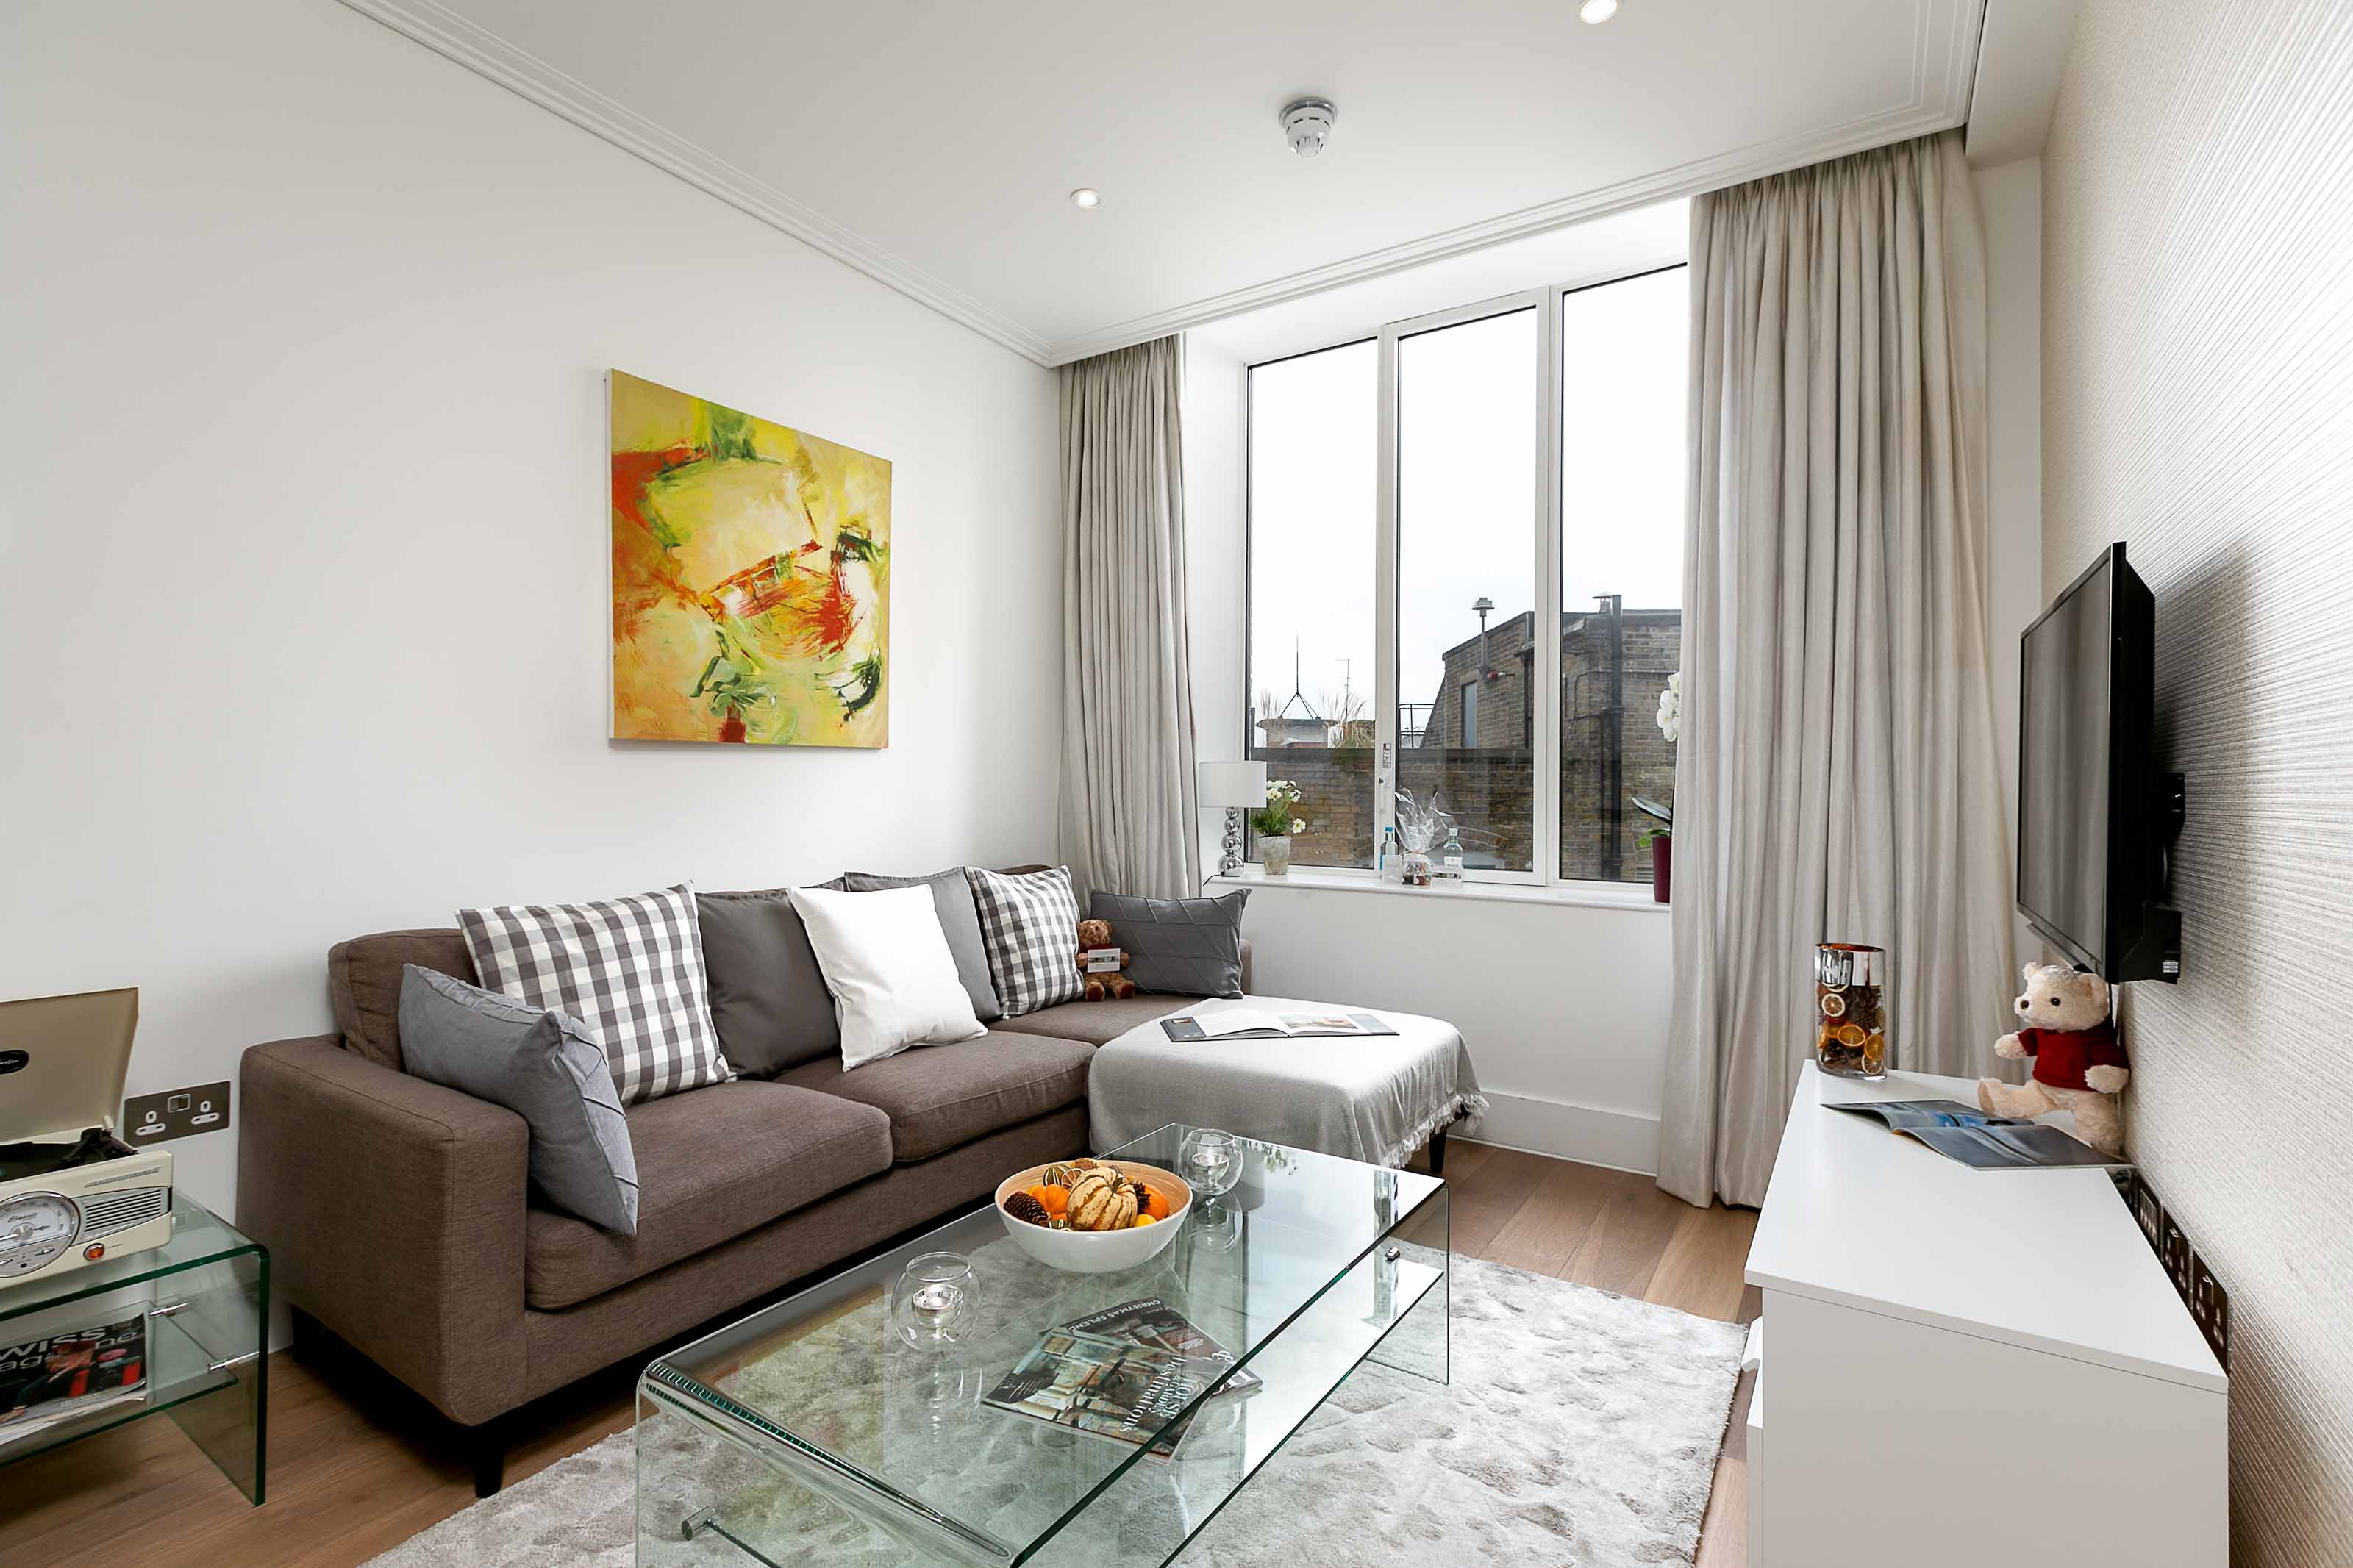 Lovelydays luxury service apartment rental - London - Covent Garden - Prince's House 506 - Lovelysuite - 2 bedrooms - 2 bathrooms - Luxury living room - Comfortable sofa - TV - ca7668f7de3e - Lovelydays